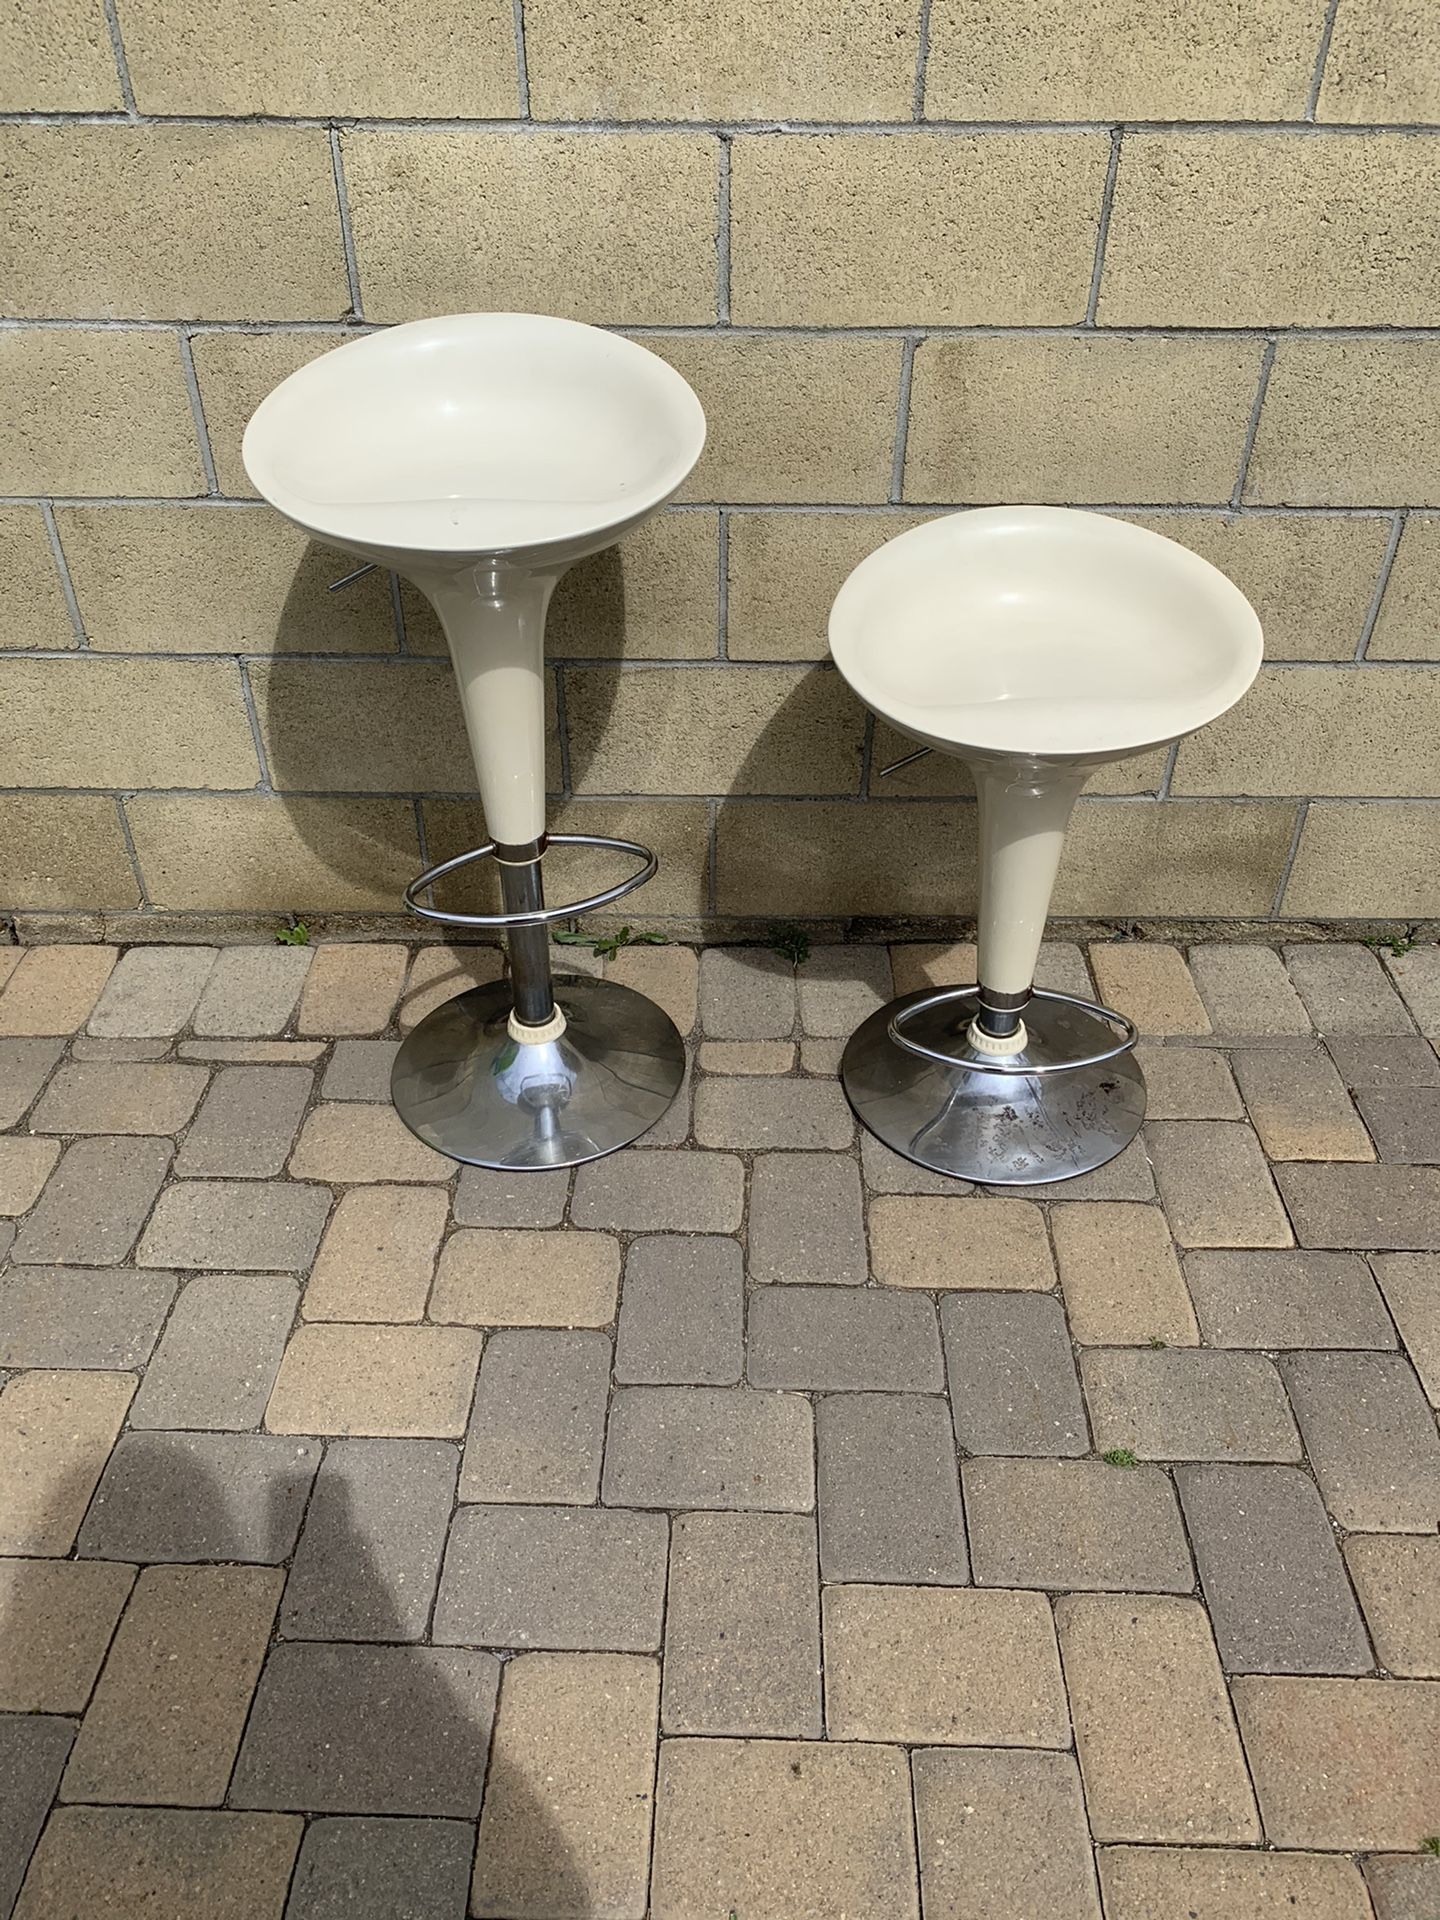 2 stools $40